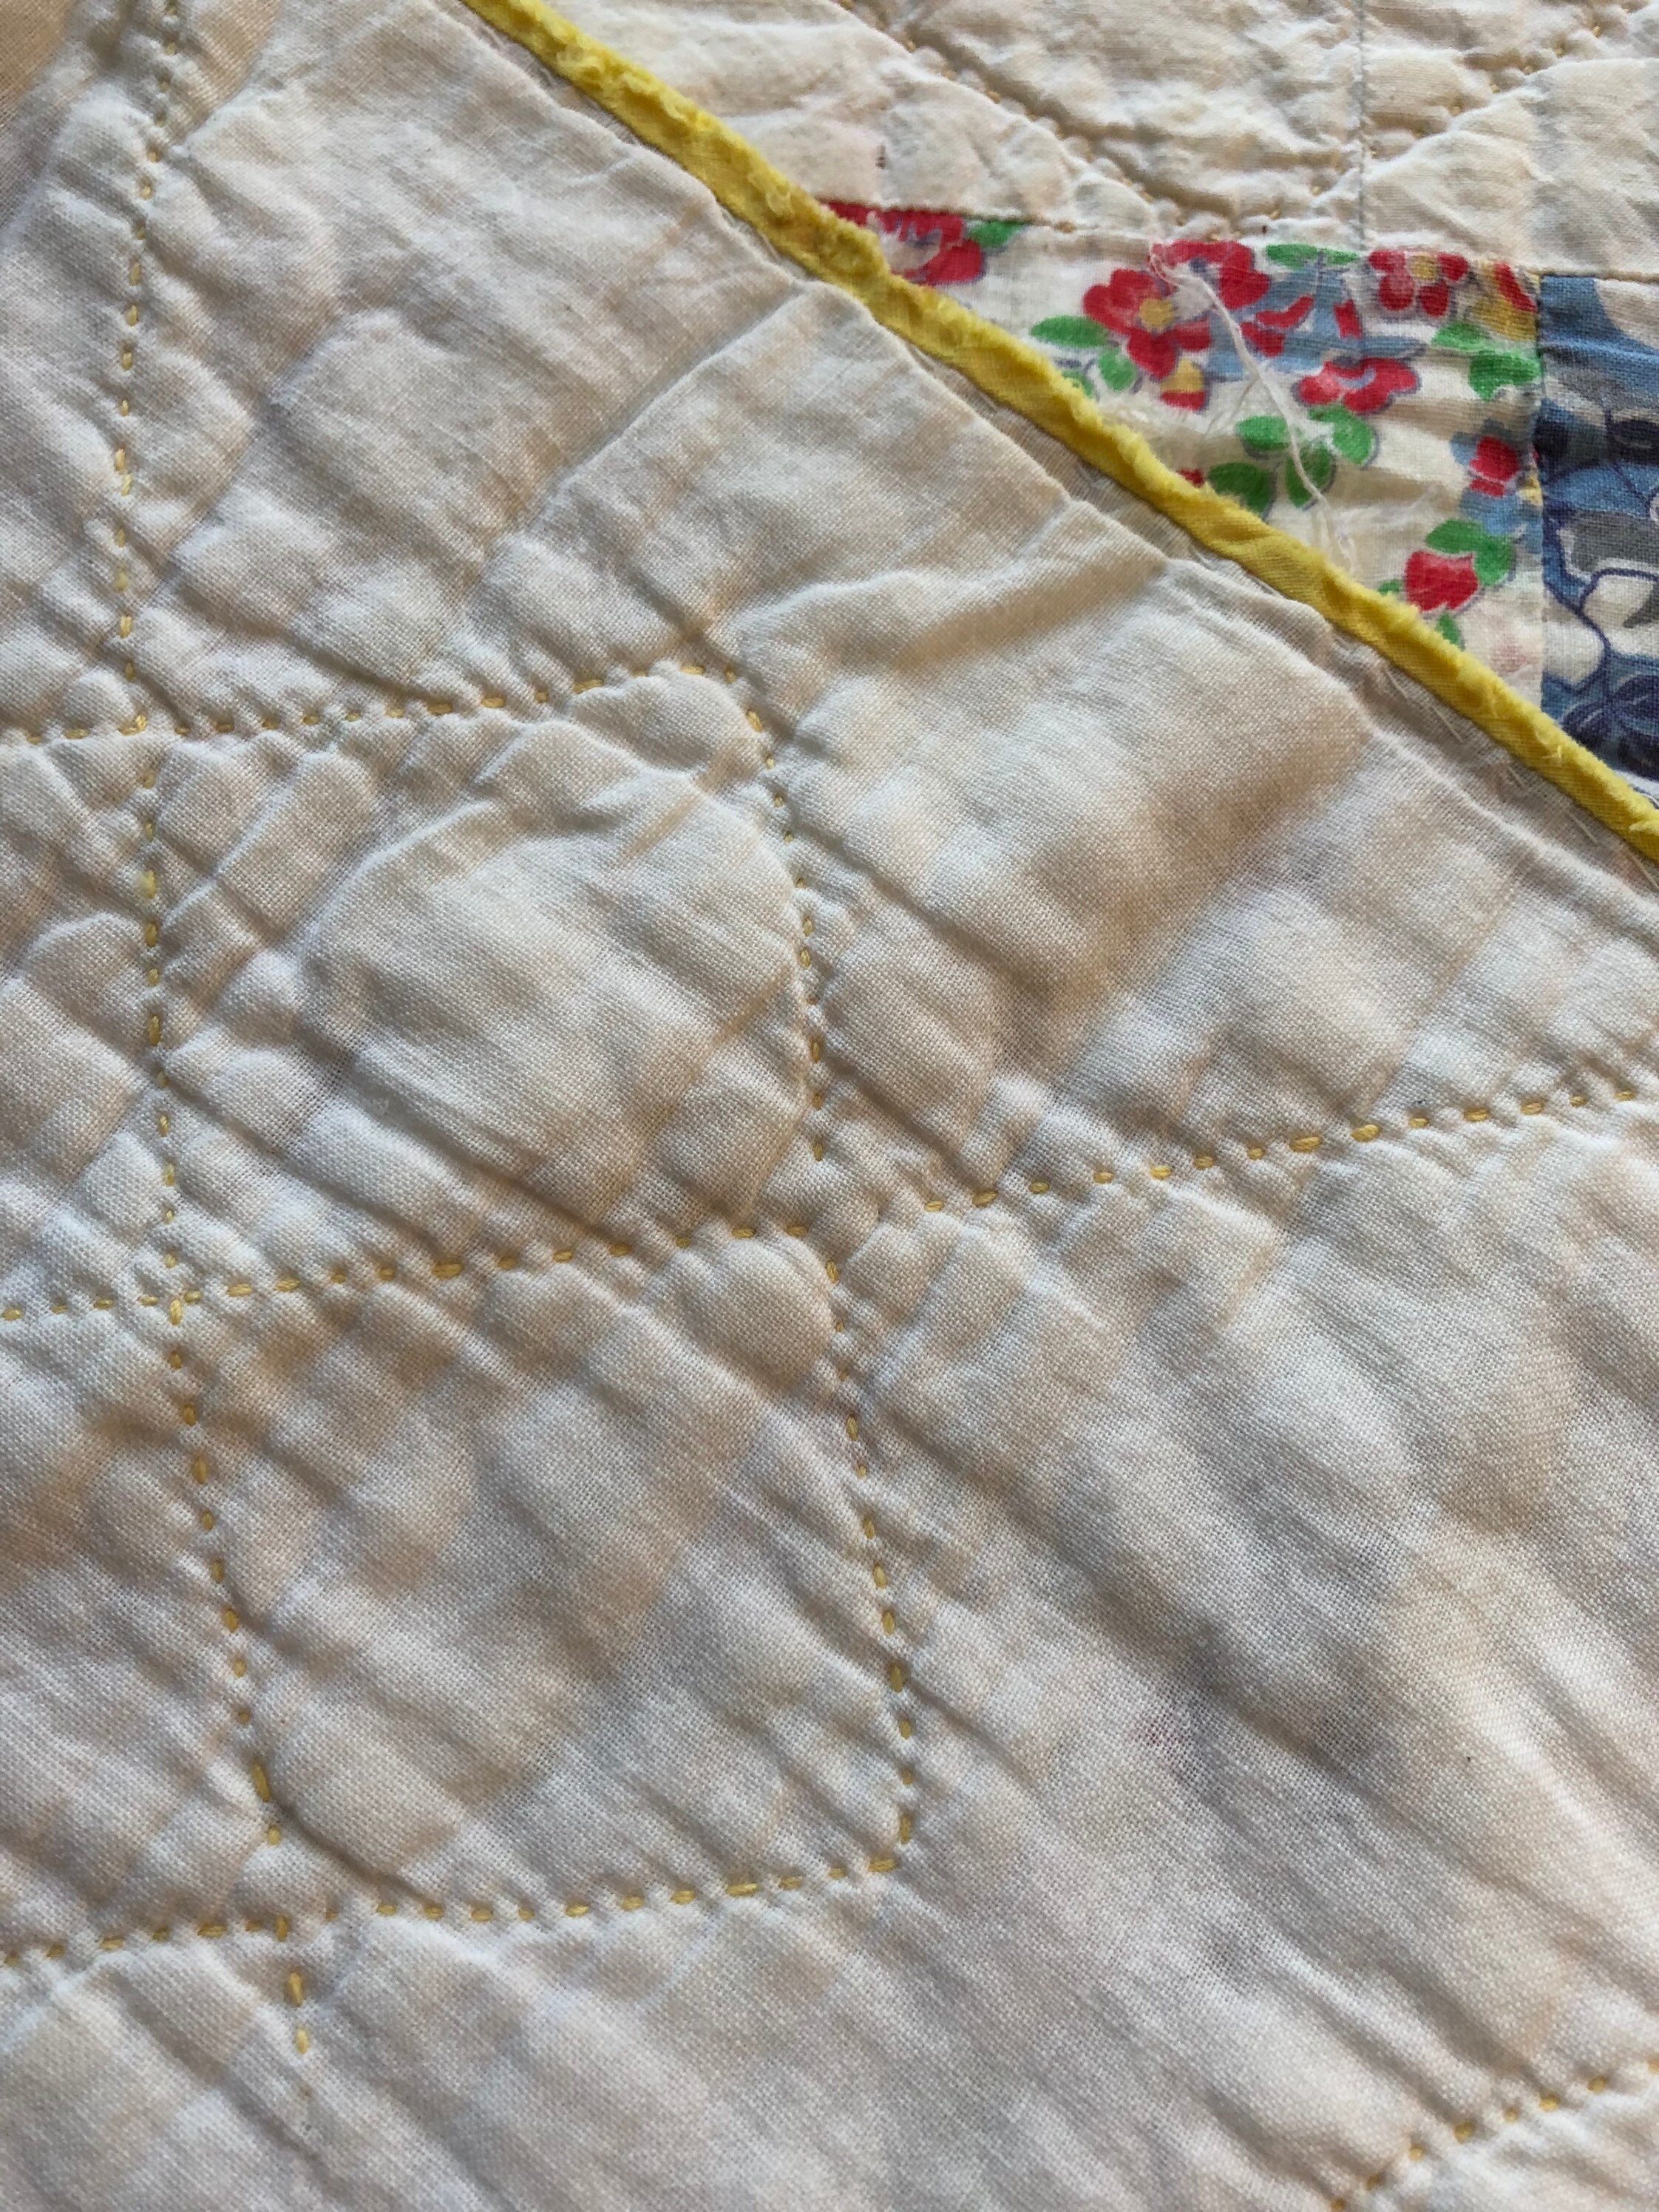 Vintage Cutter Quilt Edge Pieces / 9 Patch Hand Stitched Quilt | Etsy